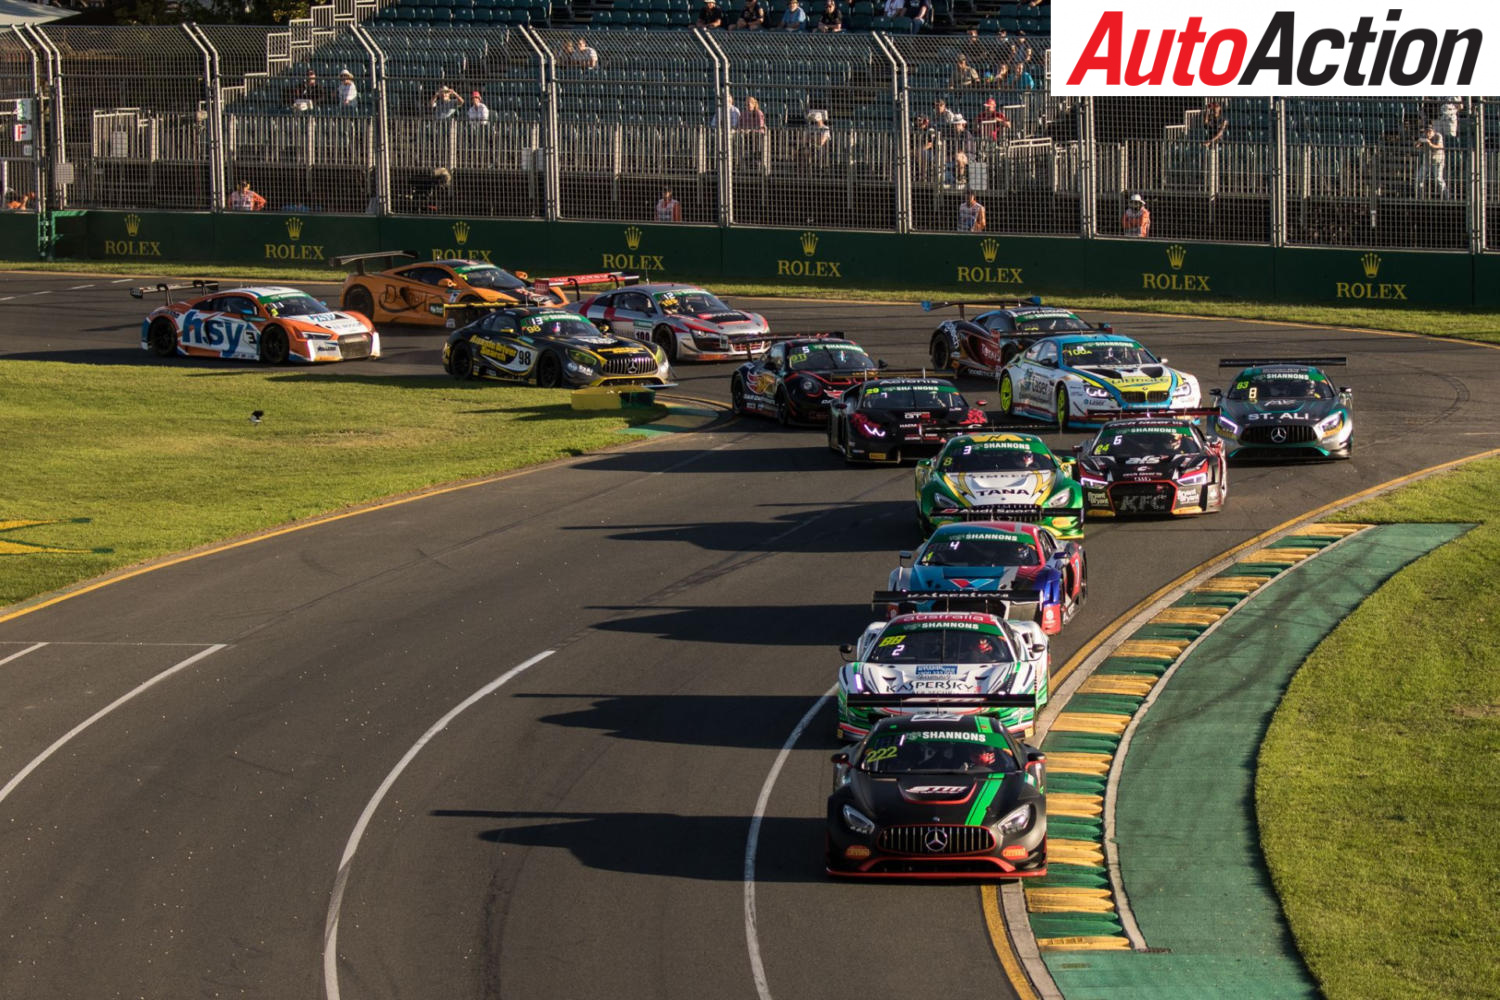 Australian GT season opens at the Grand Prix - Photo: InSyde Media